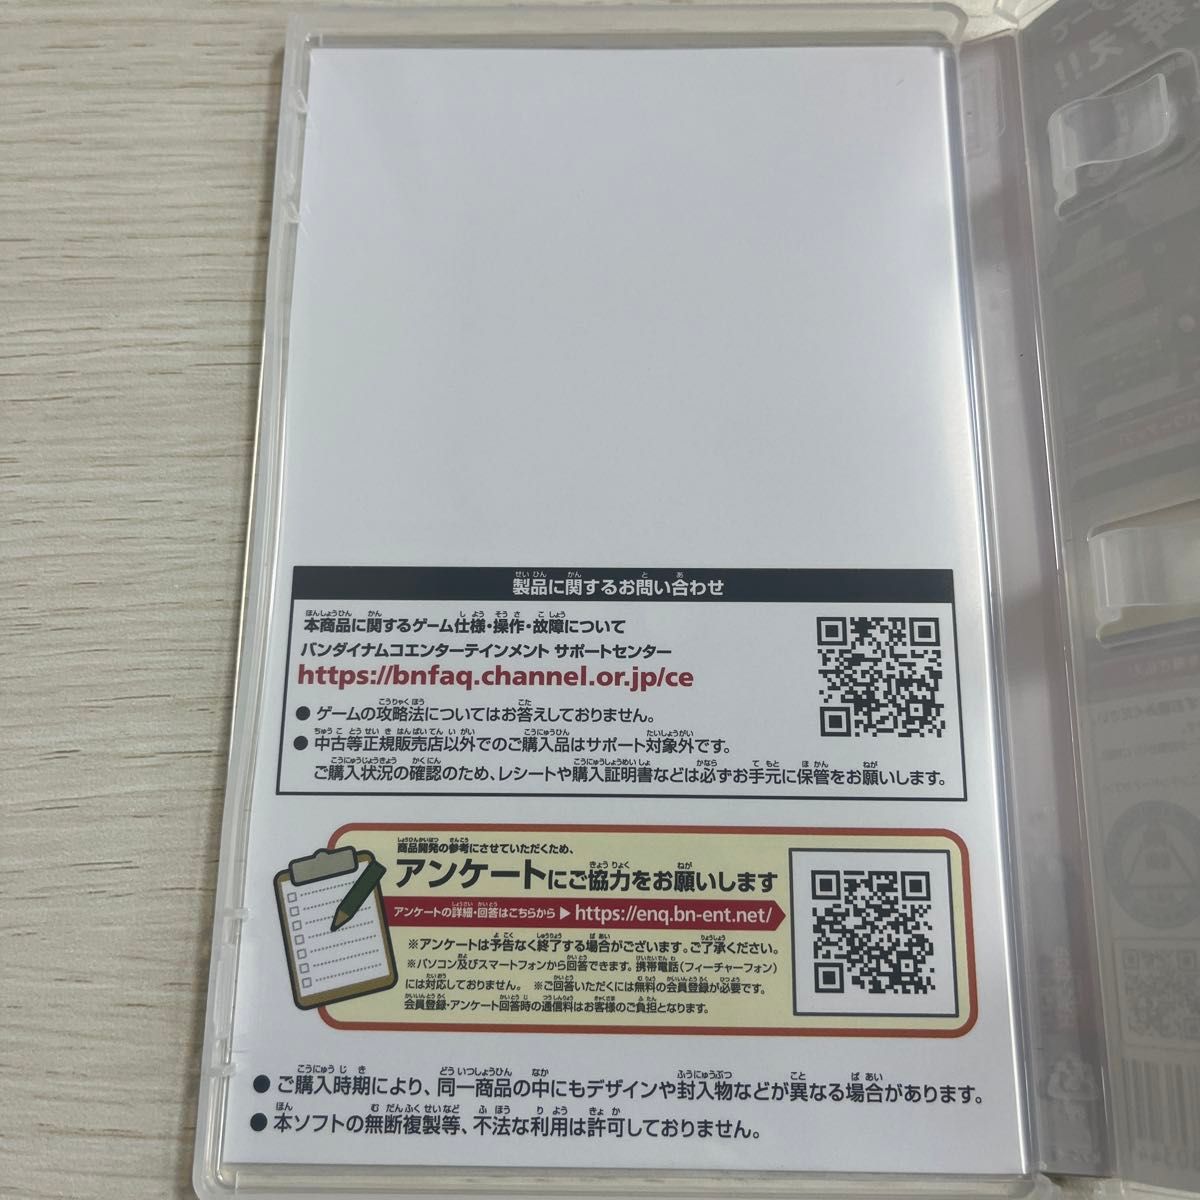 SD シン仮面ライダー 乱舞 [通常版] Nintendo Switch ソフト